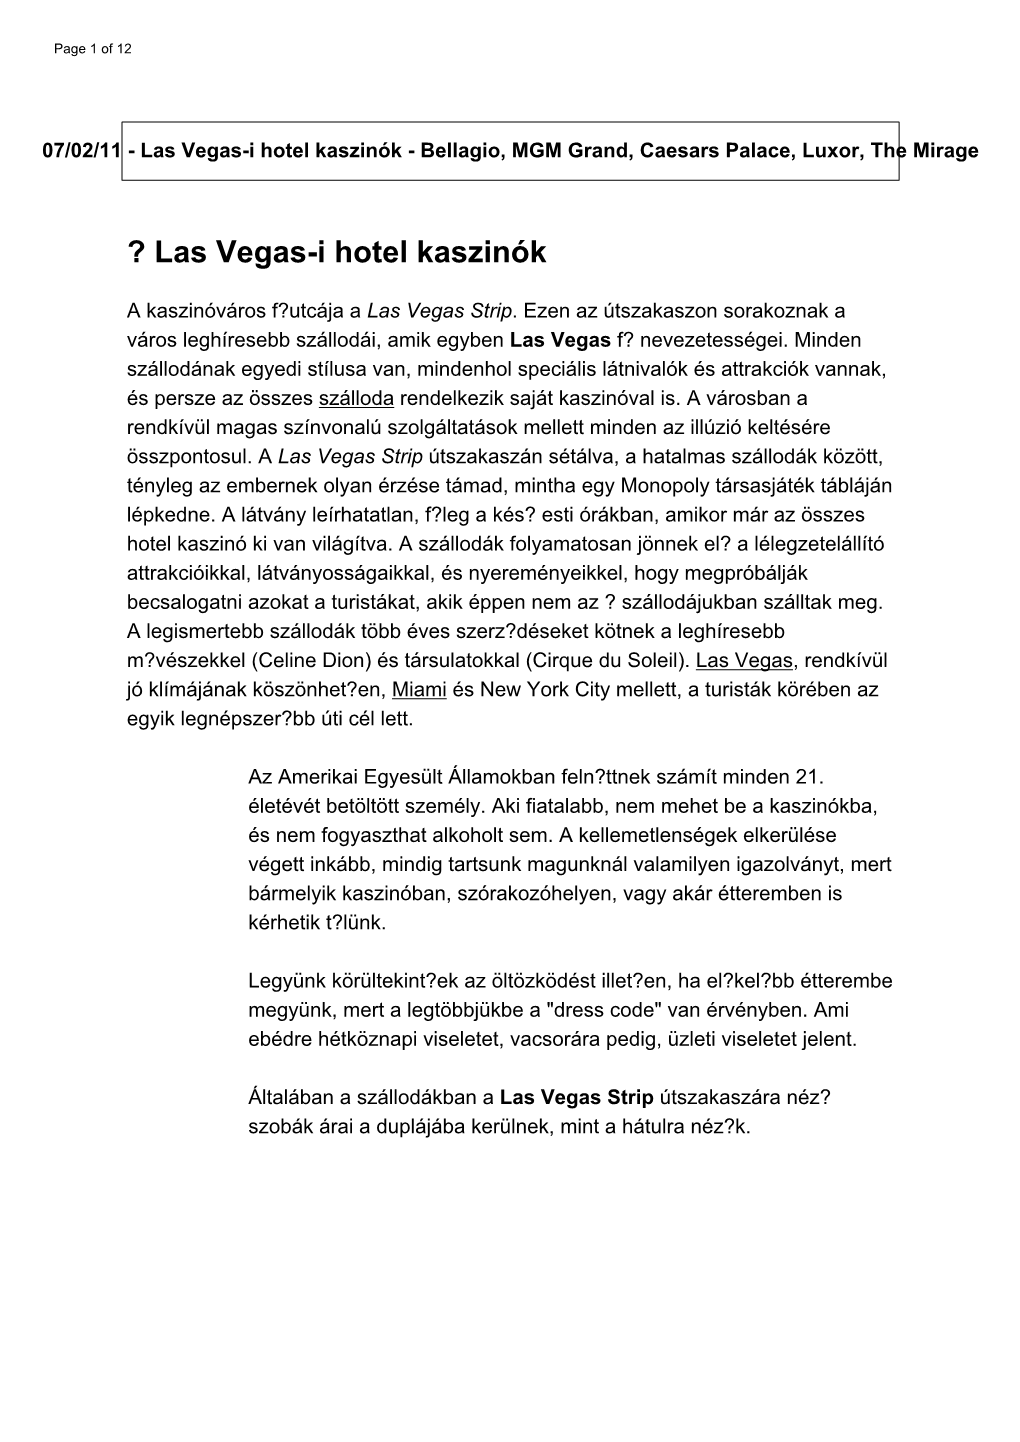 Las Vegas-I Hotel Kaszinók - Bellagio, MGM Grand, Caesars Palace, Luxor, the Mirage